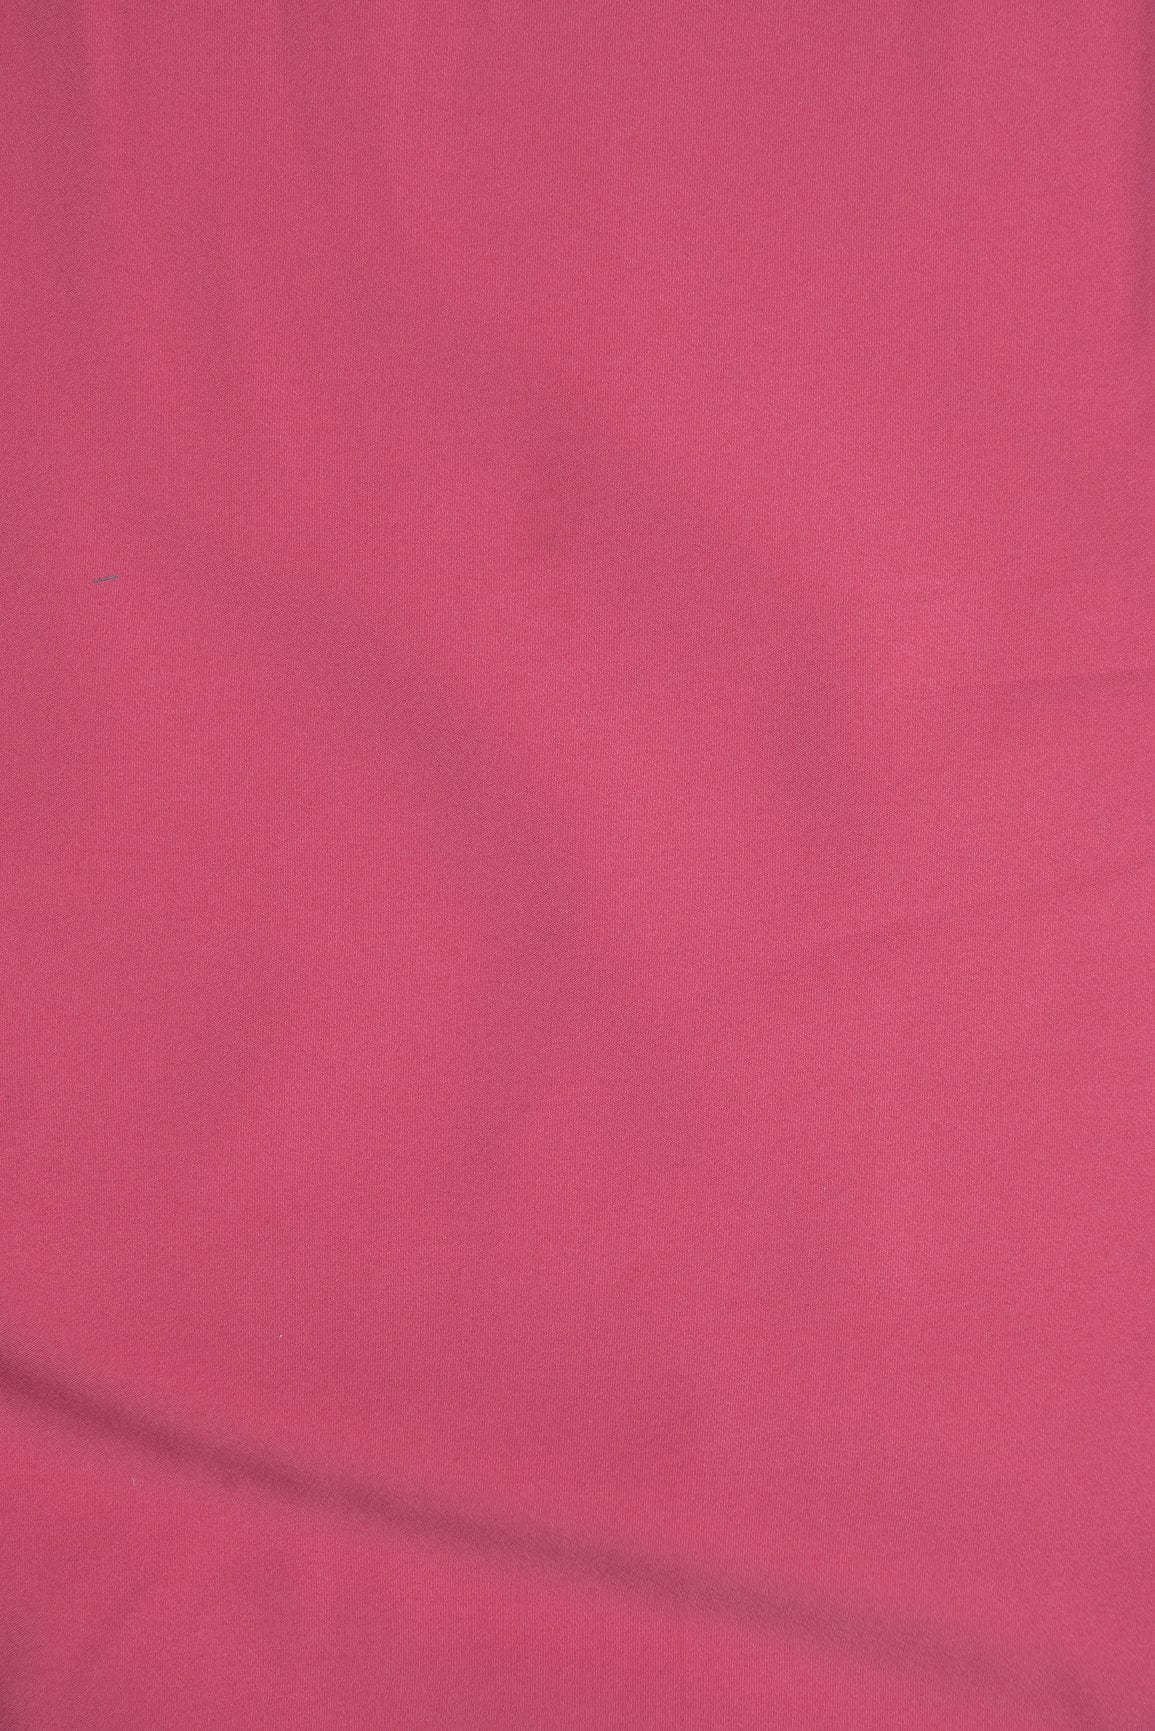 doeraa Plain Fabrics Pink Dyed Crepe Fabric